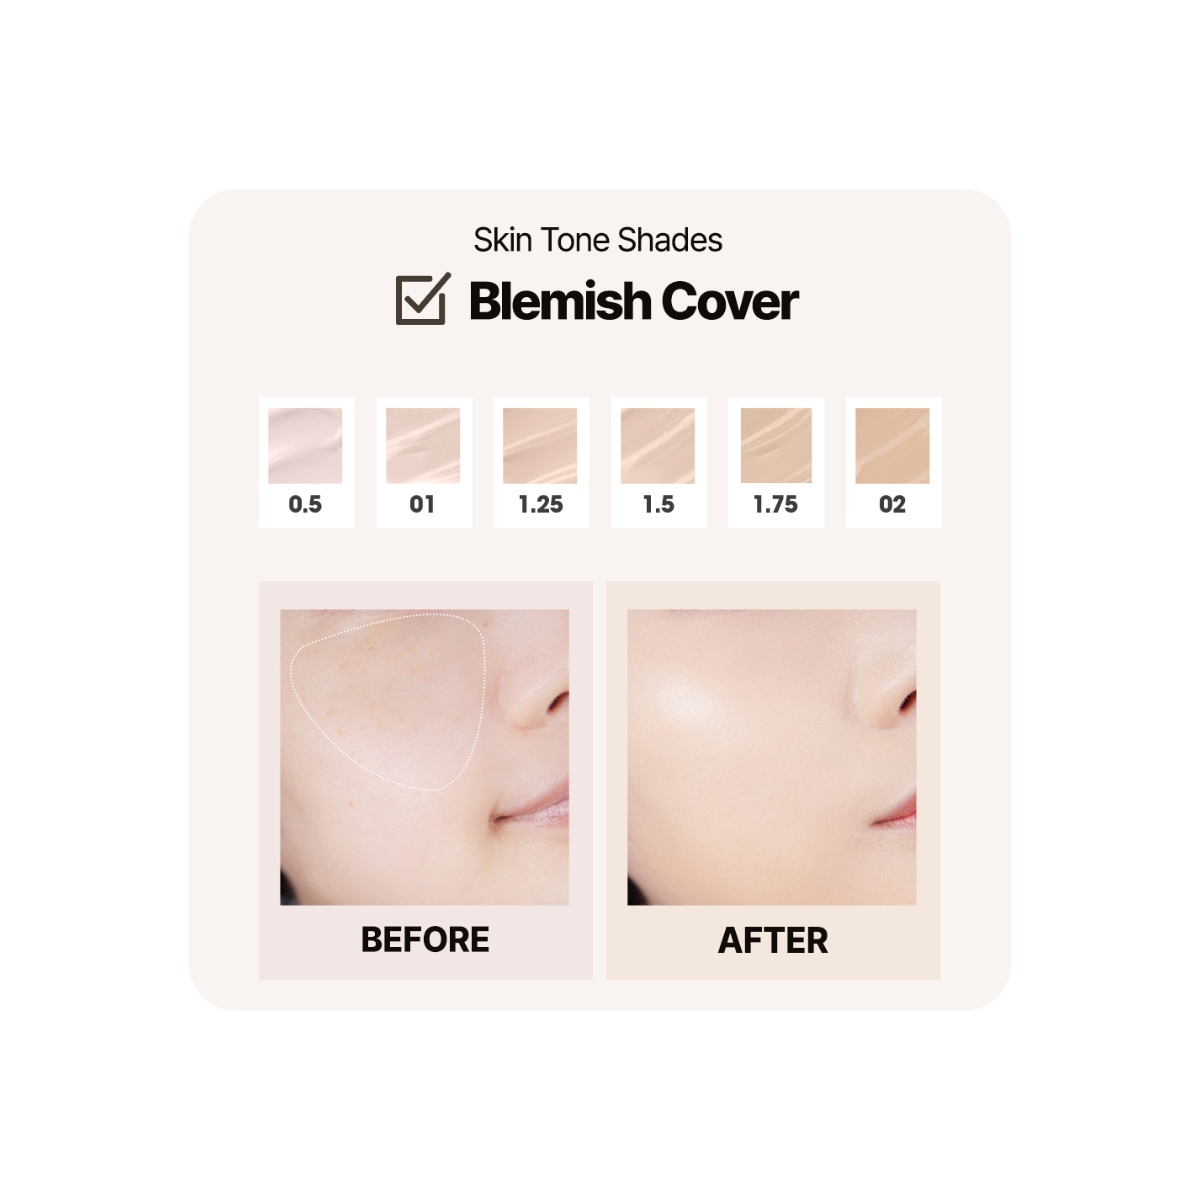 Maquillaje al mejor precio: THE SAEM Cover Perfection Tip Concealer SPF28 PA++ 1 Clear Beige de The Saem en Skin Thinks - Piel Seca